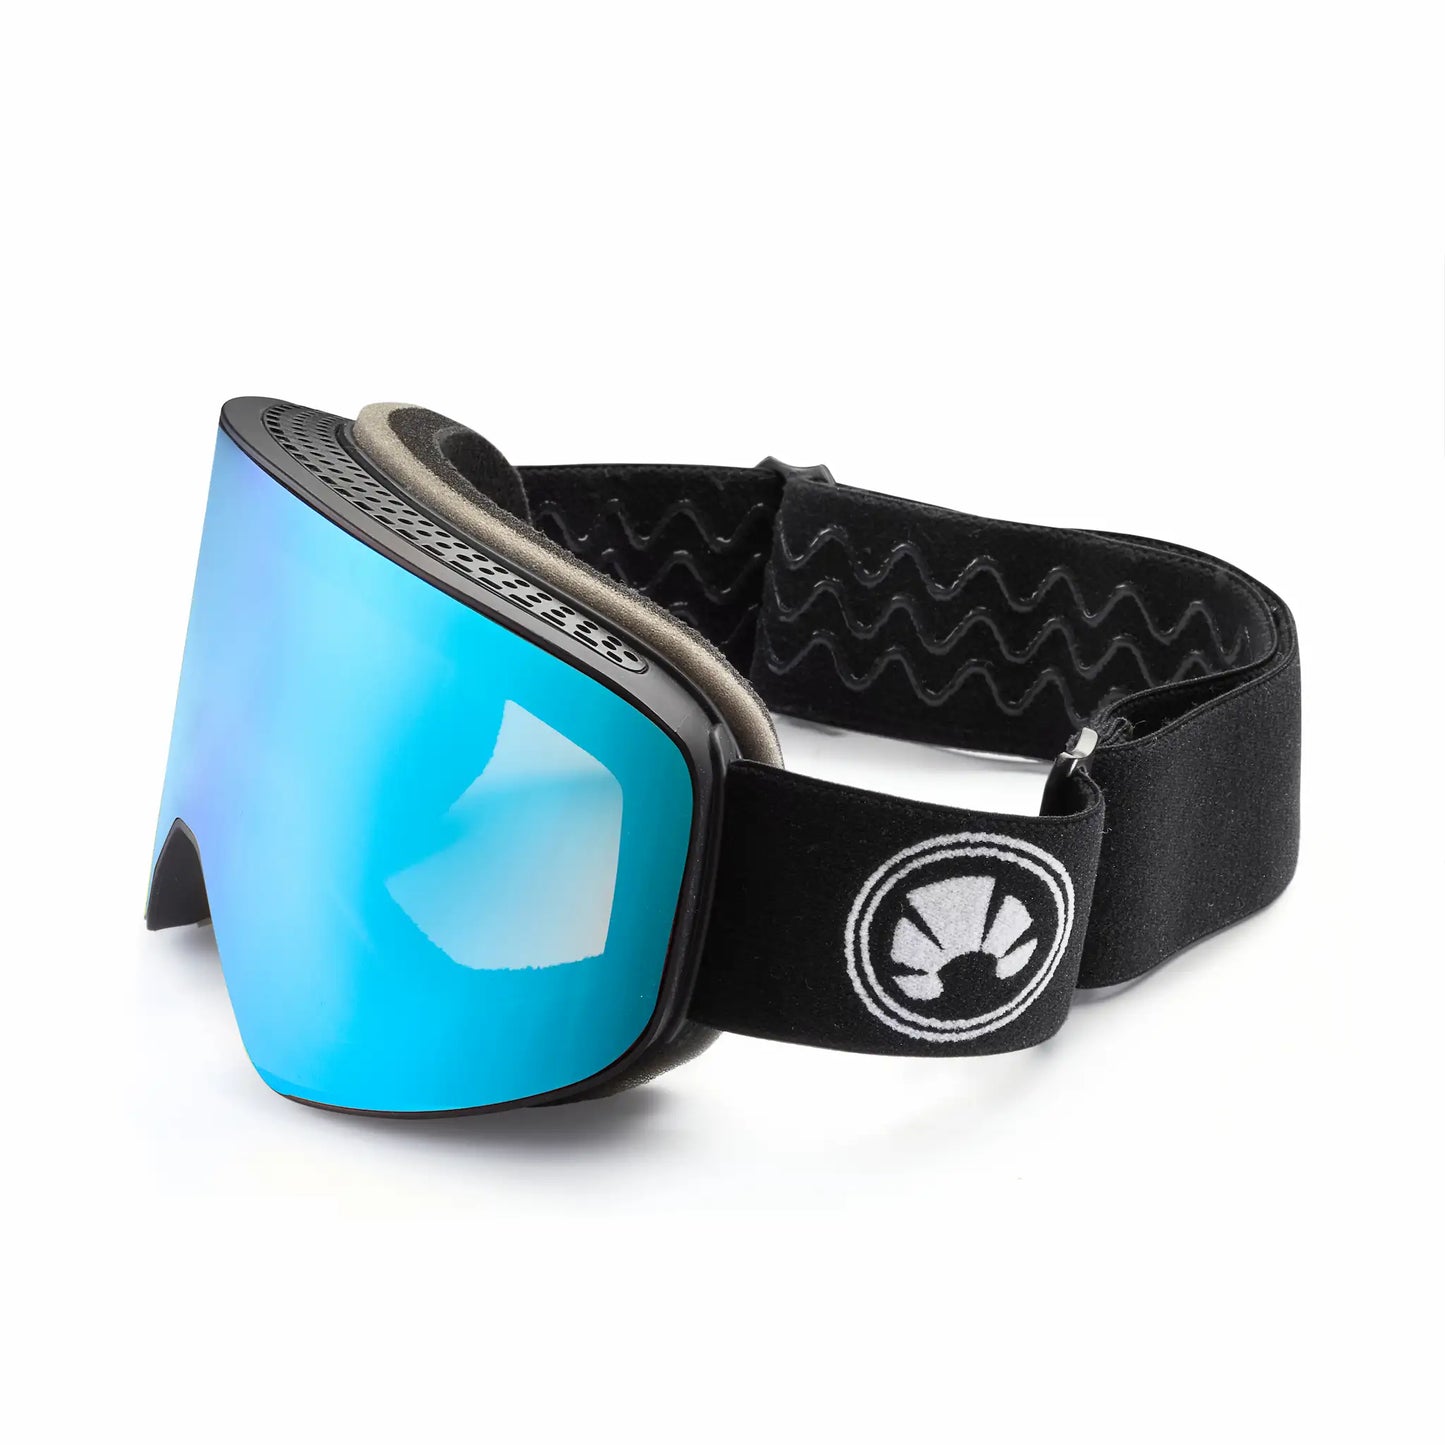 Bakedsnow blue frameless snowboard goggles